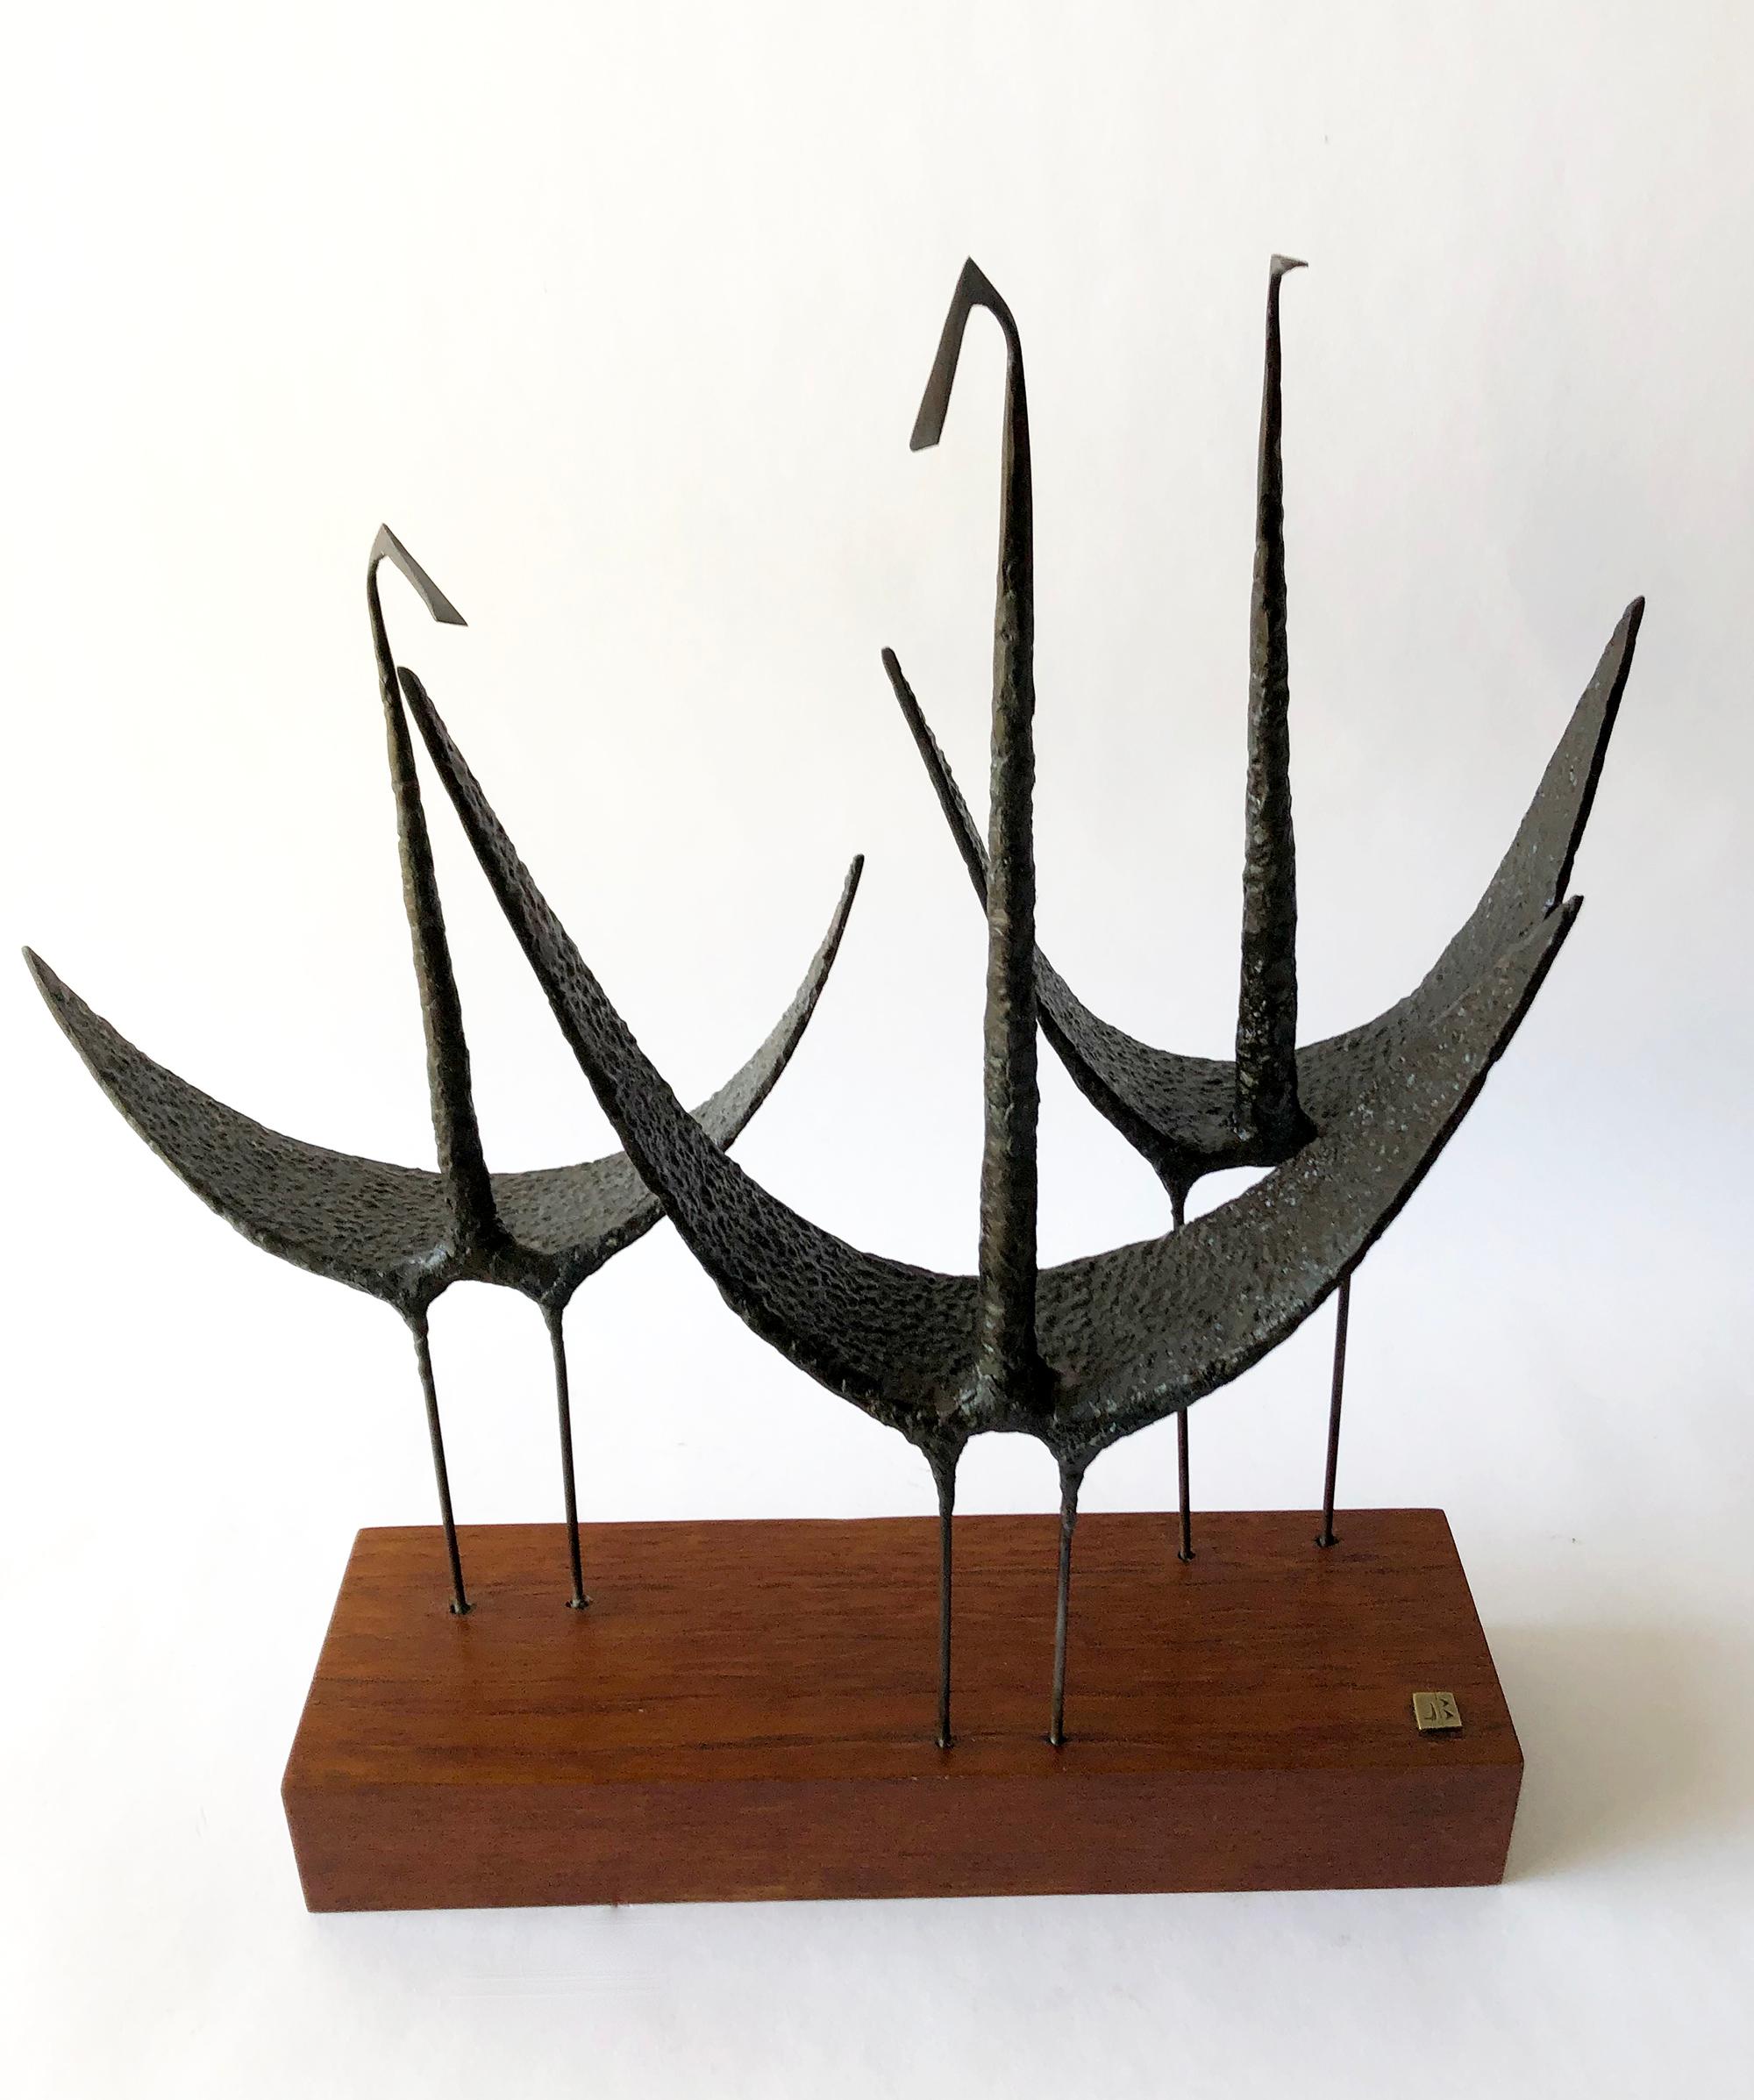 Vintage 1960s iron shorebirds sculpture on walnut base created by Jack Boyd of San Diego, California. Sculpture measures 17.5